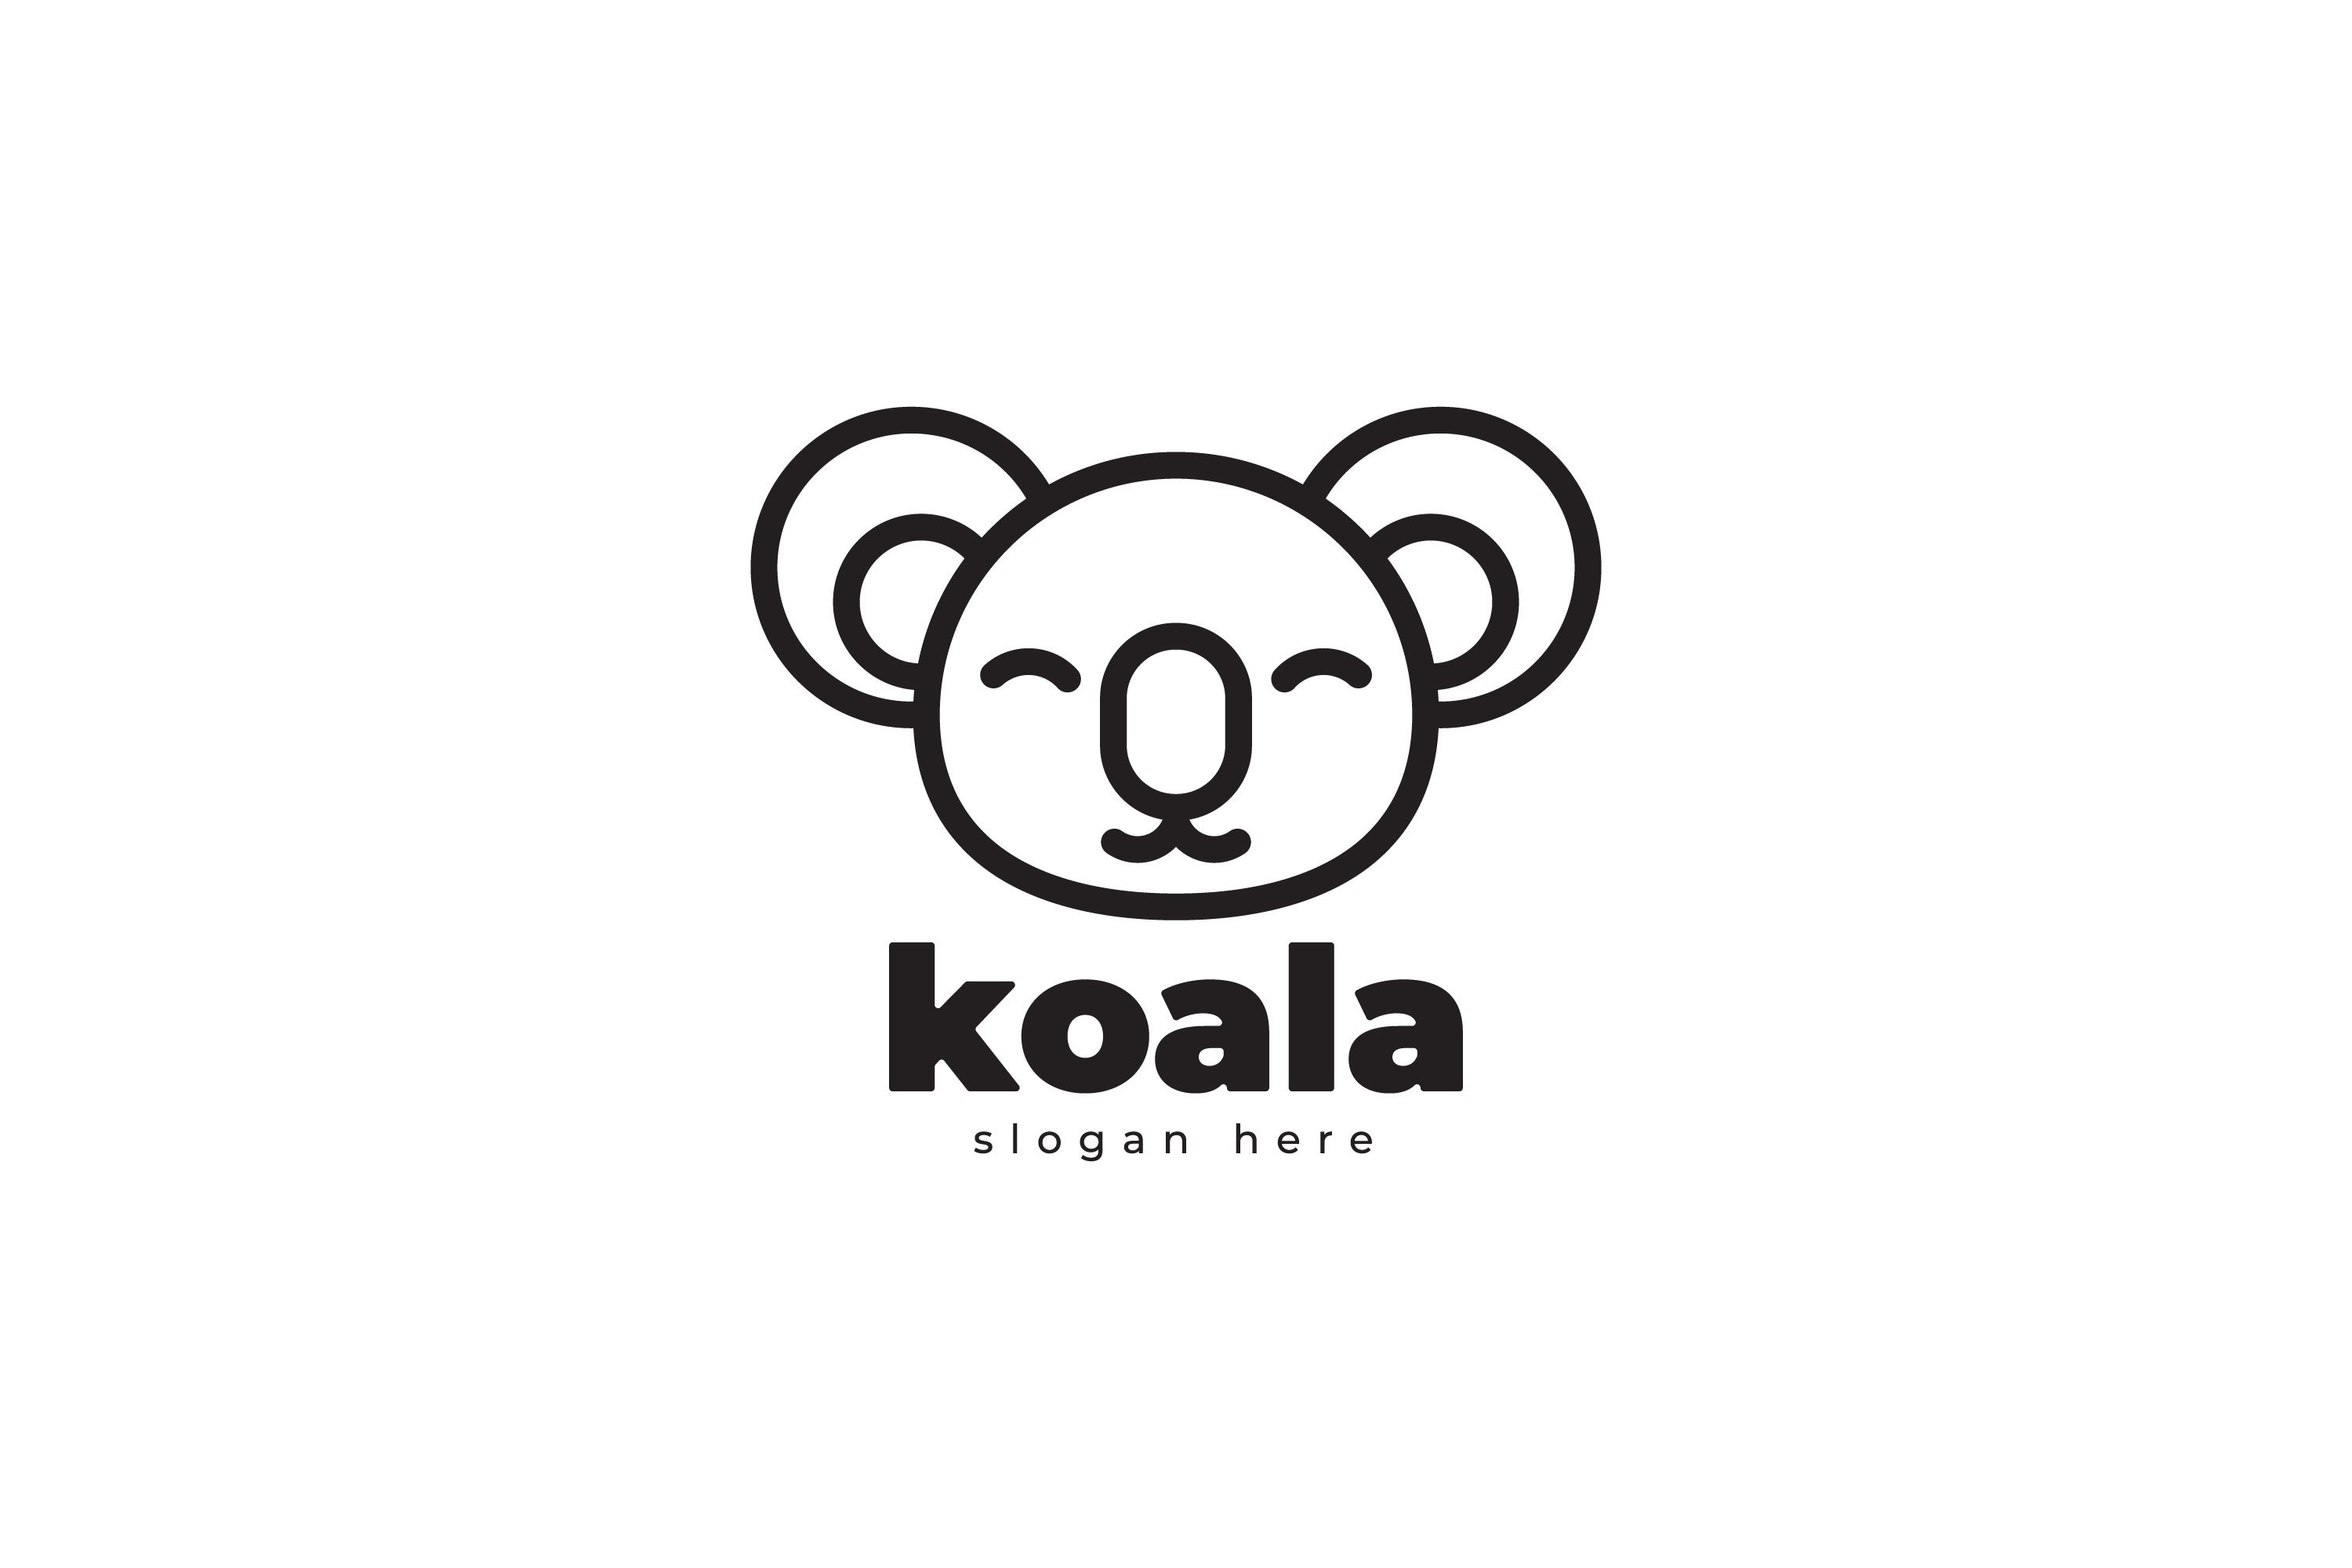 Koala Monoline Simple Logo cover image.